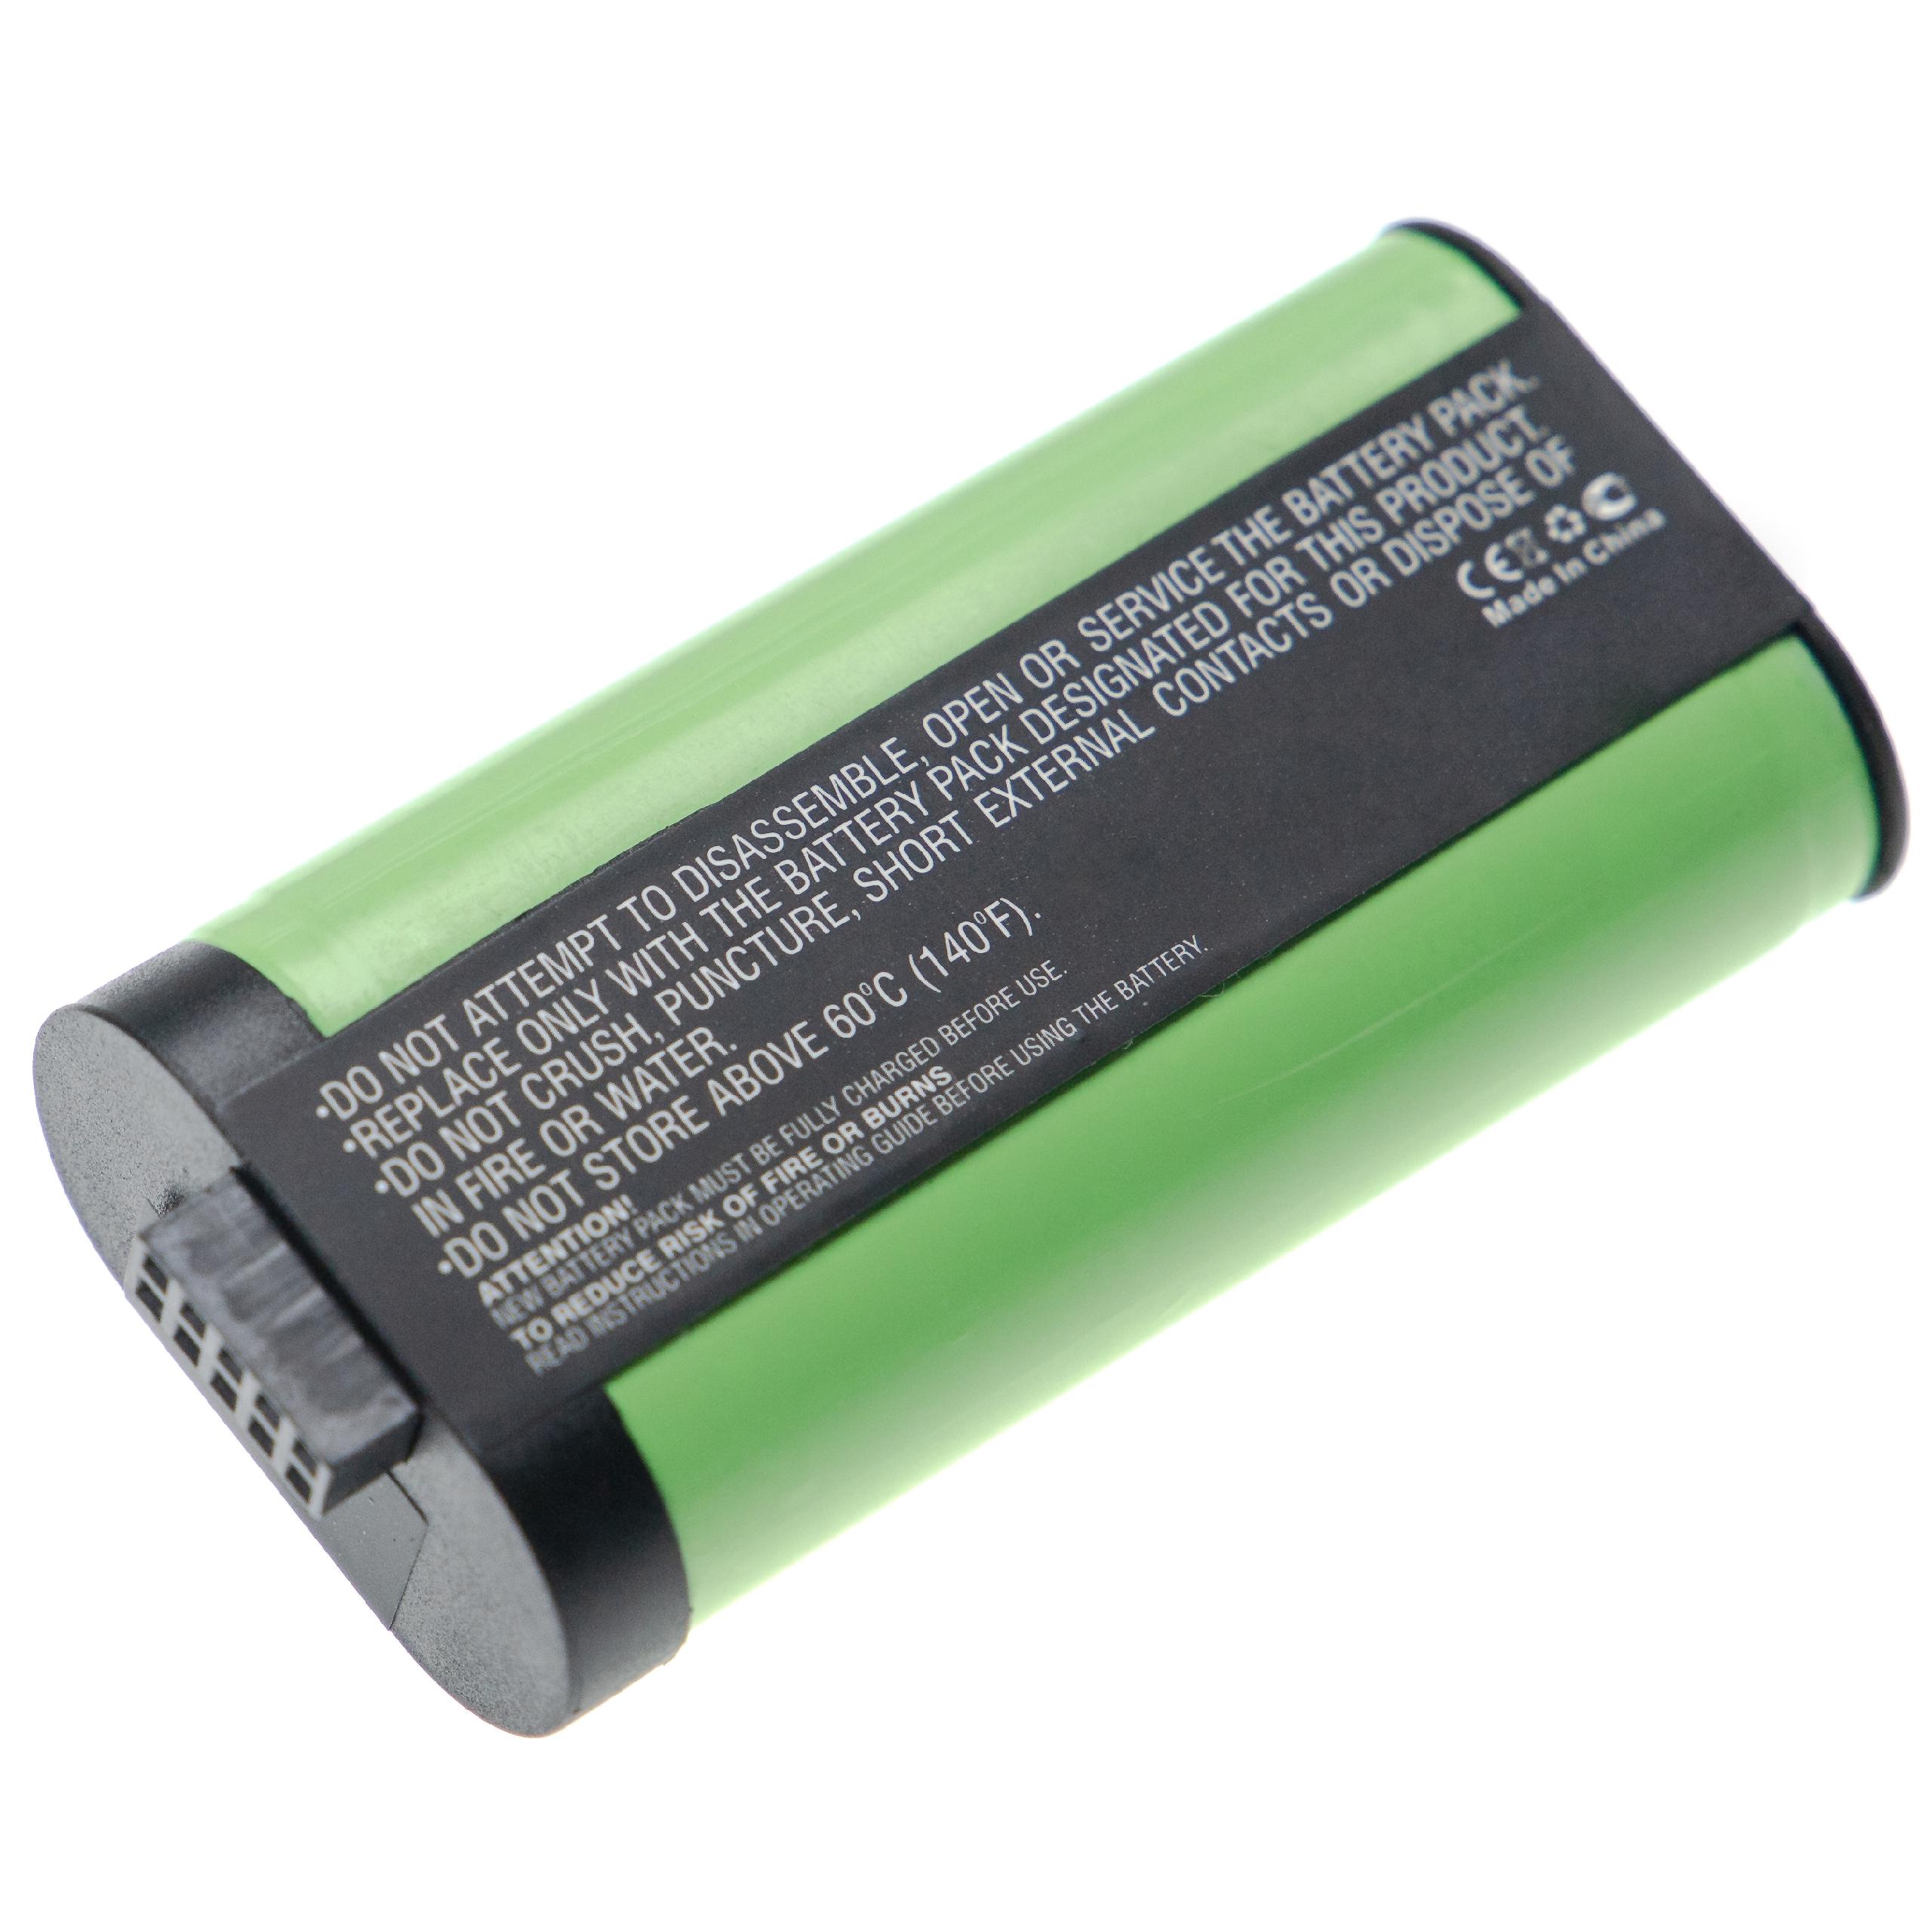 Batería reemplaza Logitech 533-000146 para altavoces Logitech - 3400 mAh 7,4 V Li-Ion